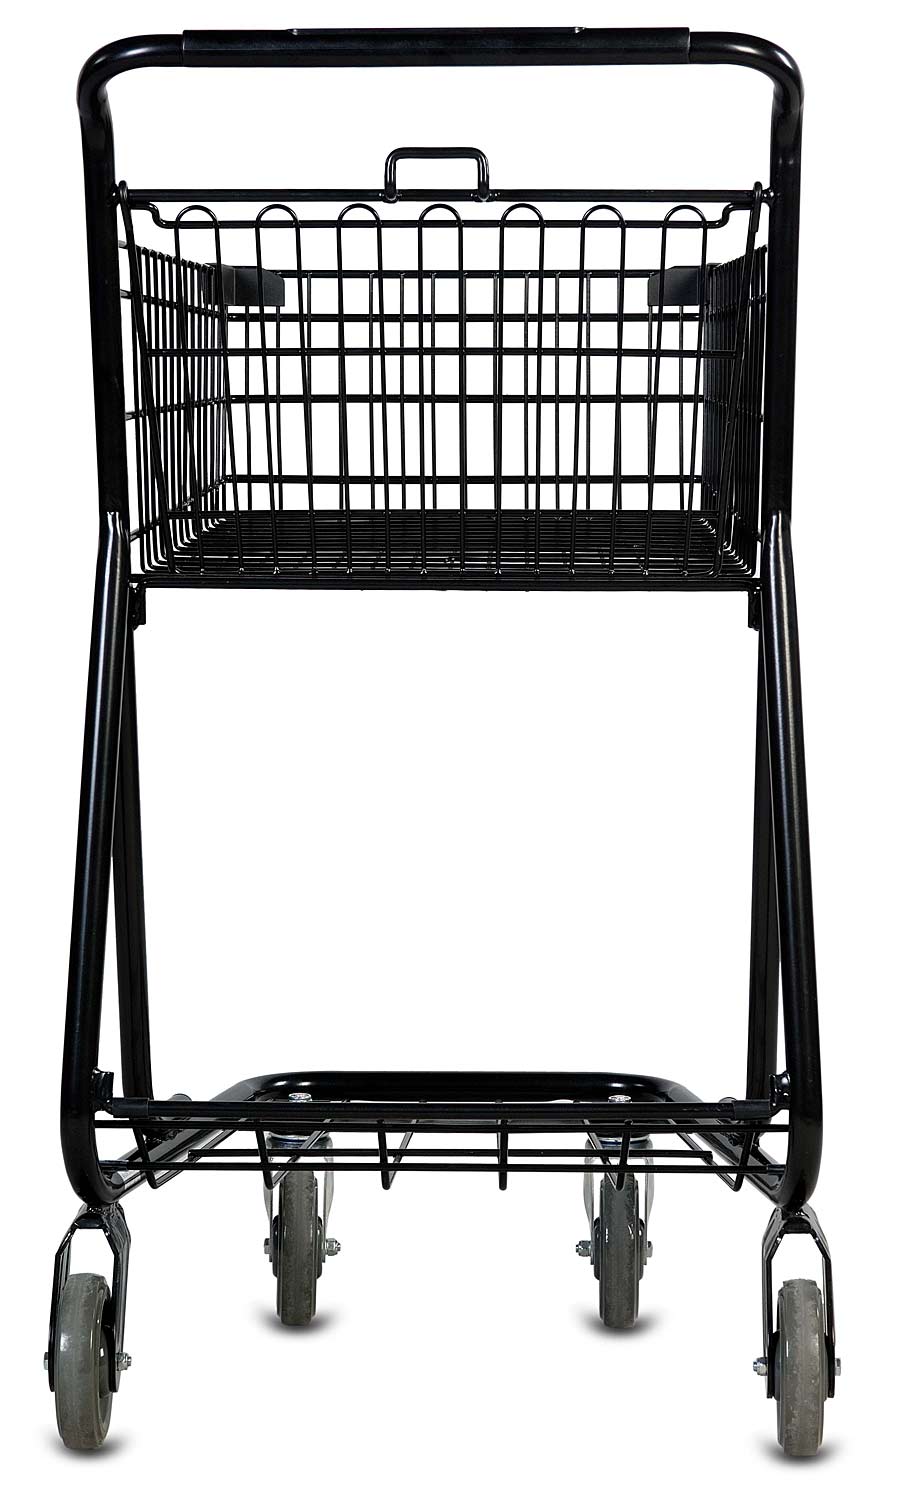 EXpress3540 Metal Shopping Cart, Utility Cart, Stocking Cart